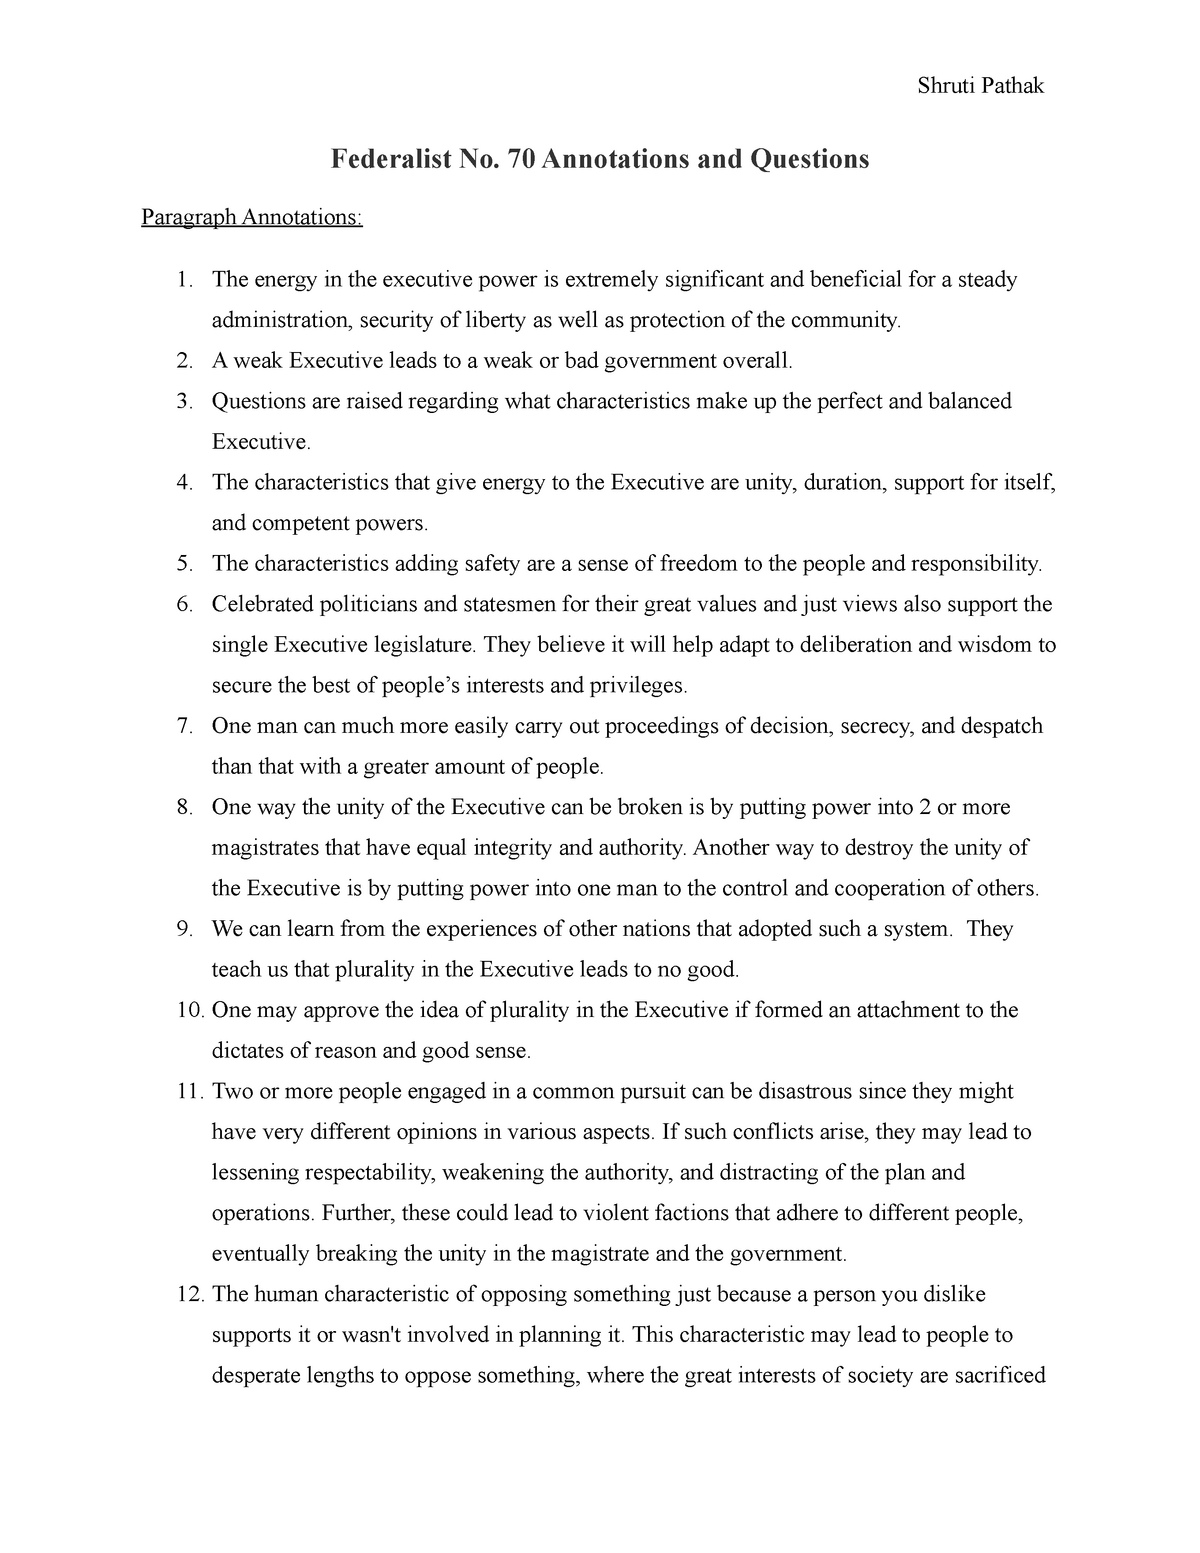 federalist essay 70 summary